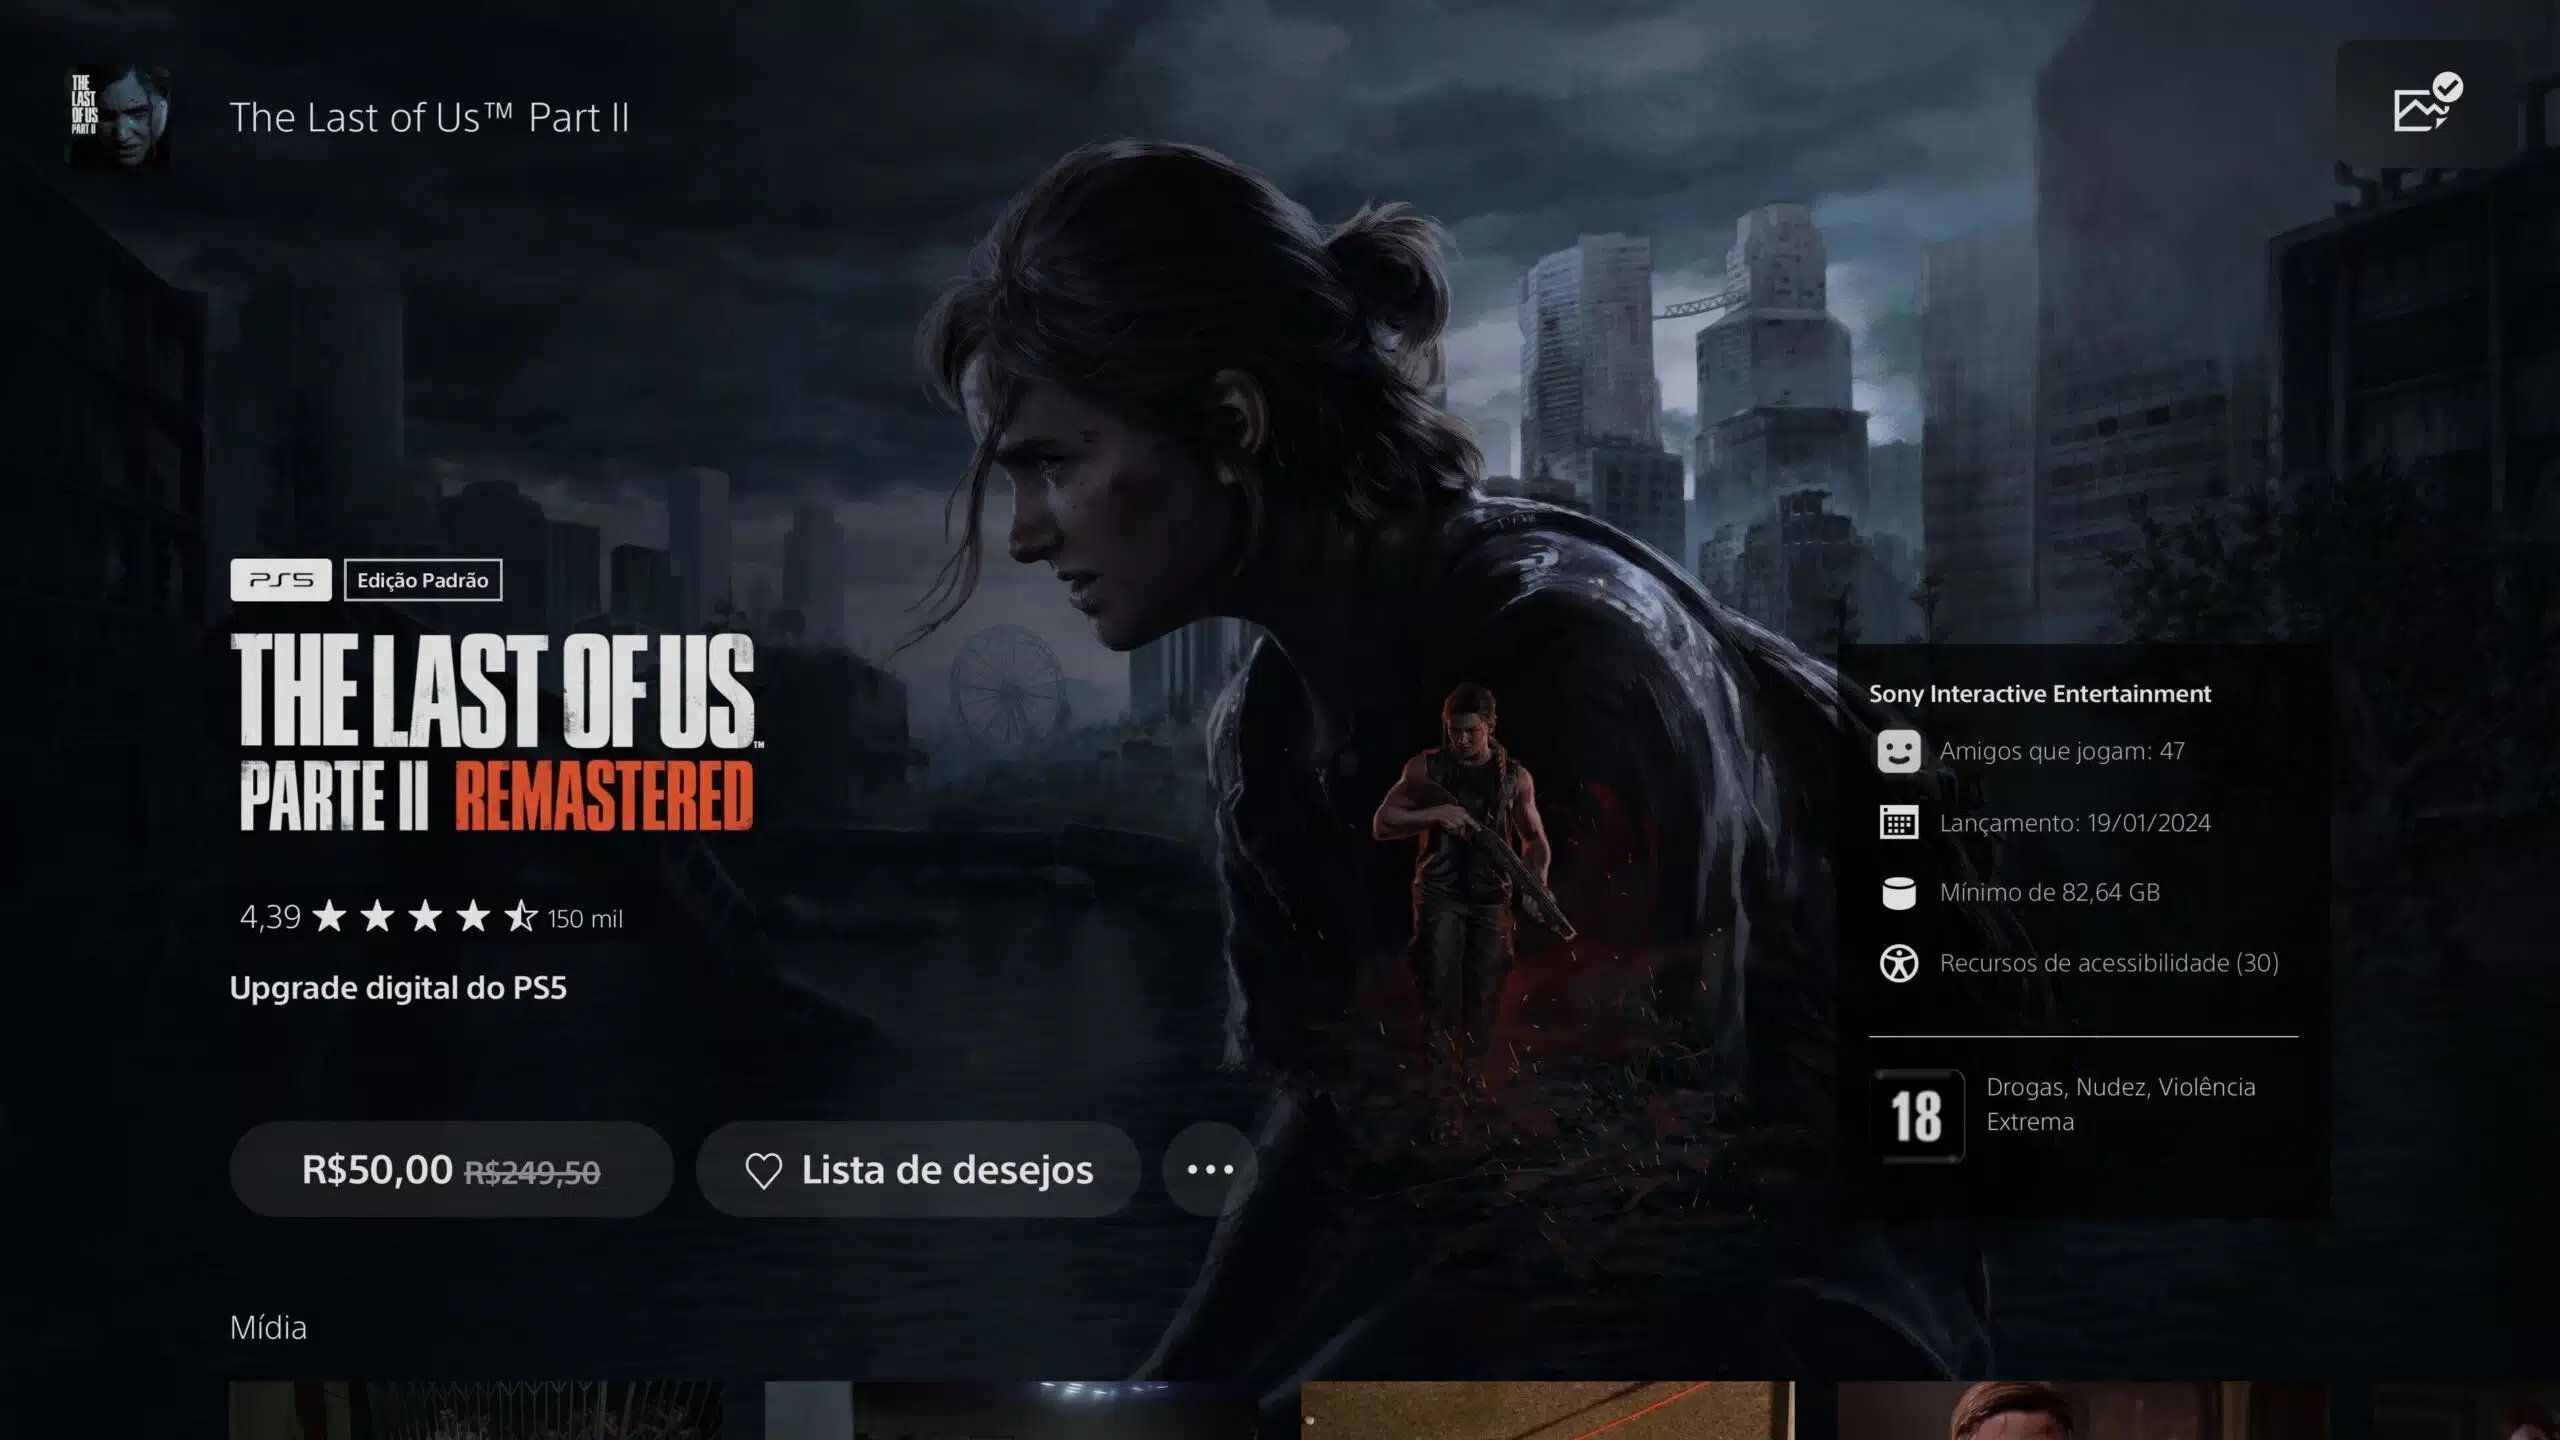 Upgrade de The Last of Us Part 2 para PS5 pagamento de R$ 50 sendo requisitado para baixar a versão de PS5 do The Last of Us Part II remastered